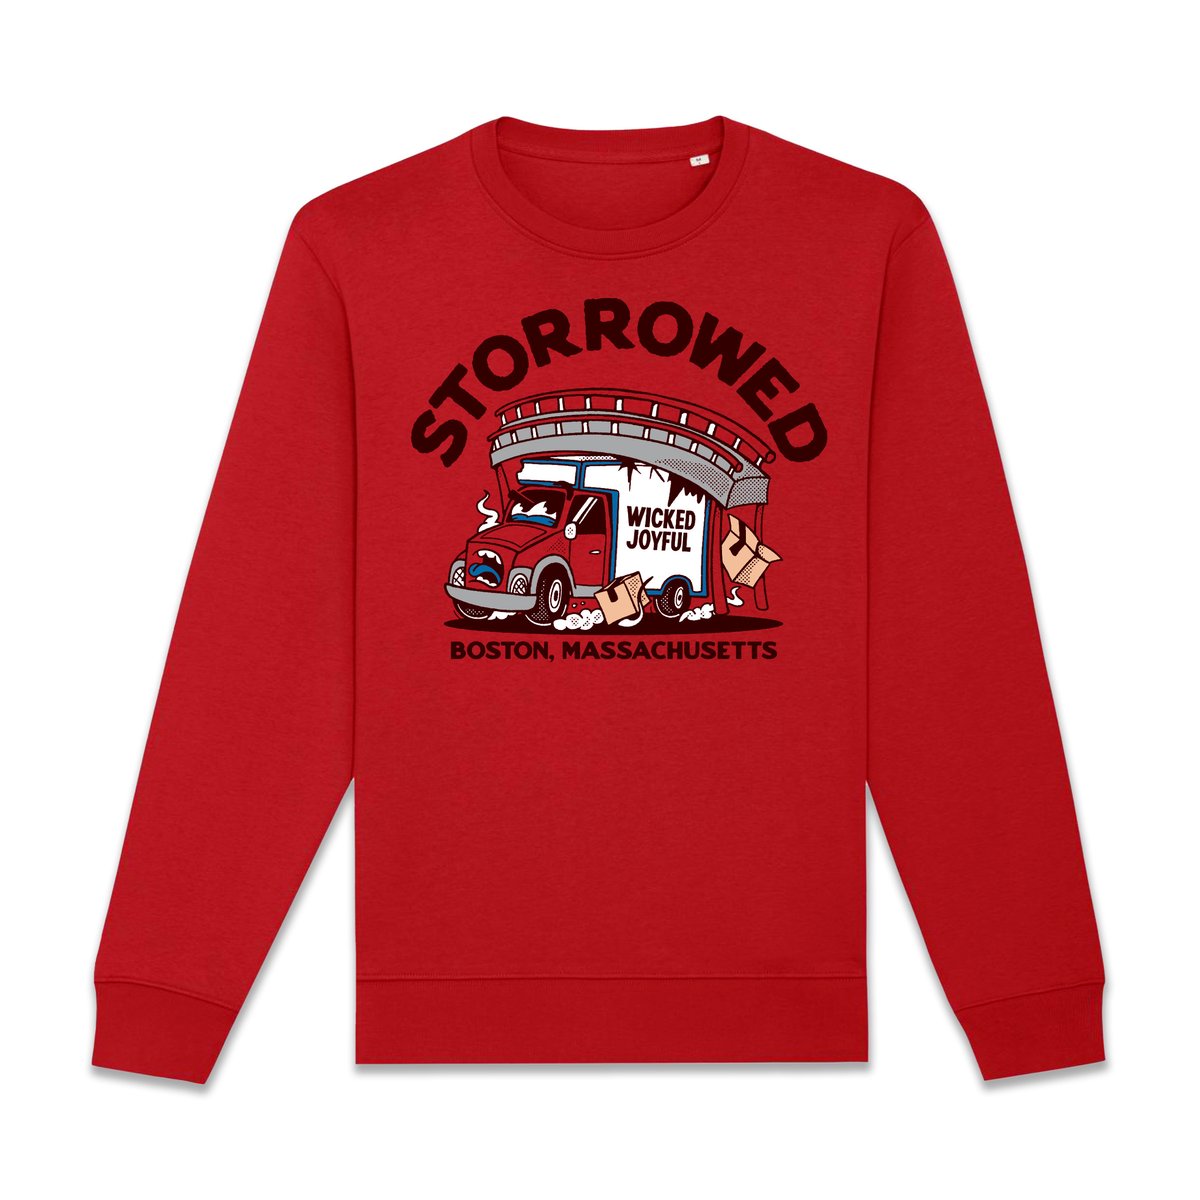 Storrowed Crewneck Sweatshirt